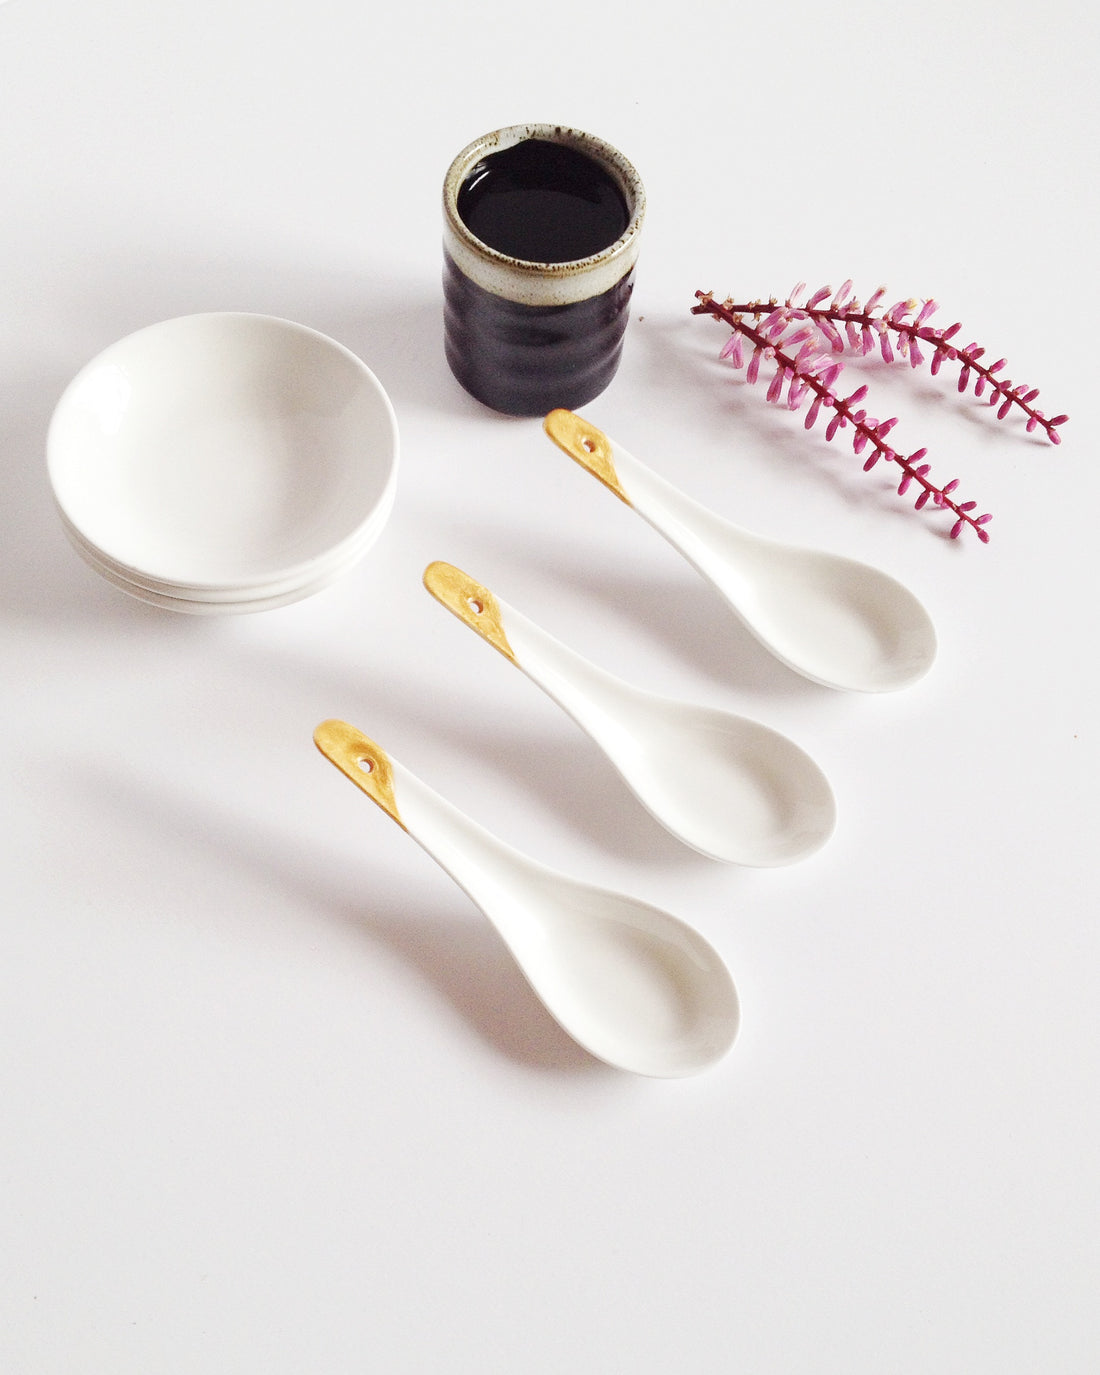 DIY dip dyed soup spoons